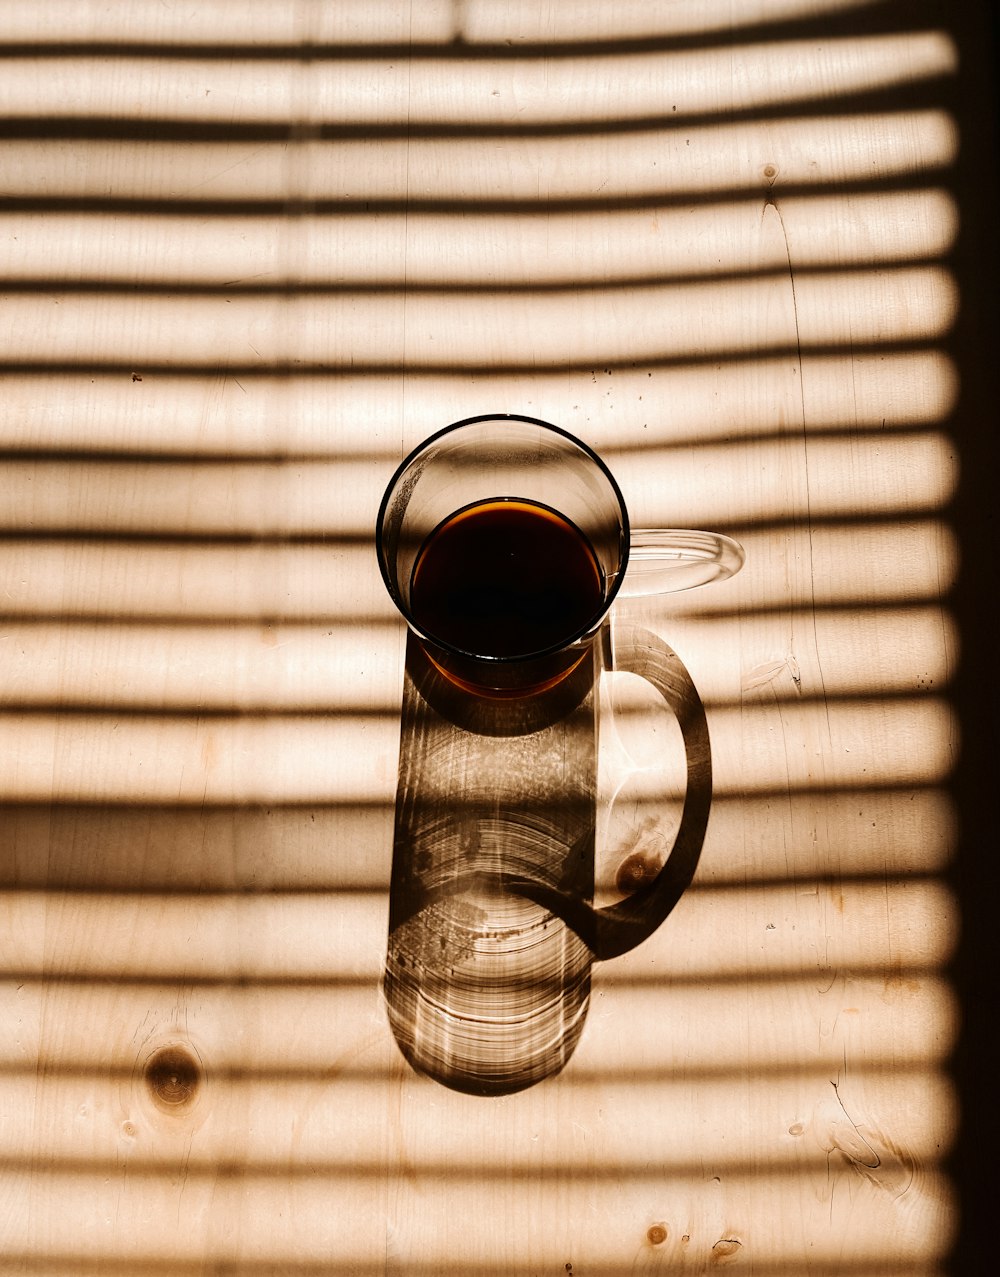 clear glass mug with brown liquid inside